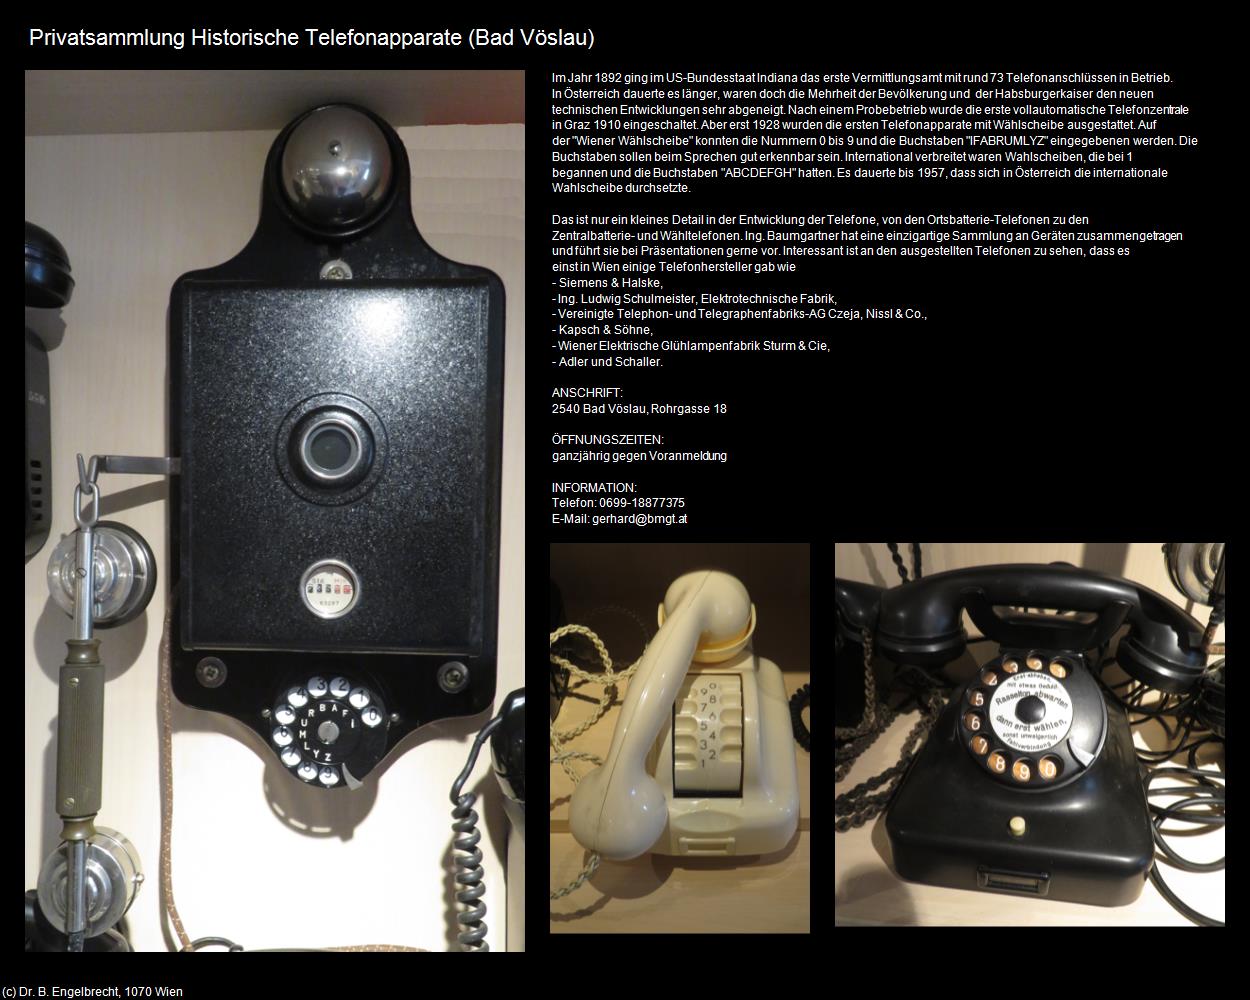 Privatsammlung Hist. Telefonapparate (Bad Vöslau) in Kulturatlas-NIEDERÖSTERREICH